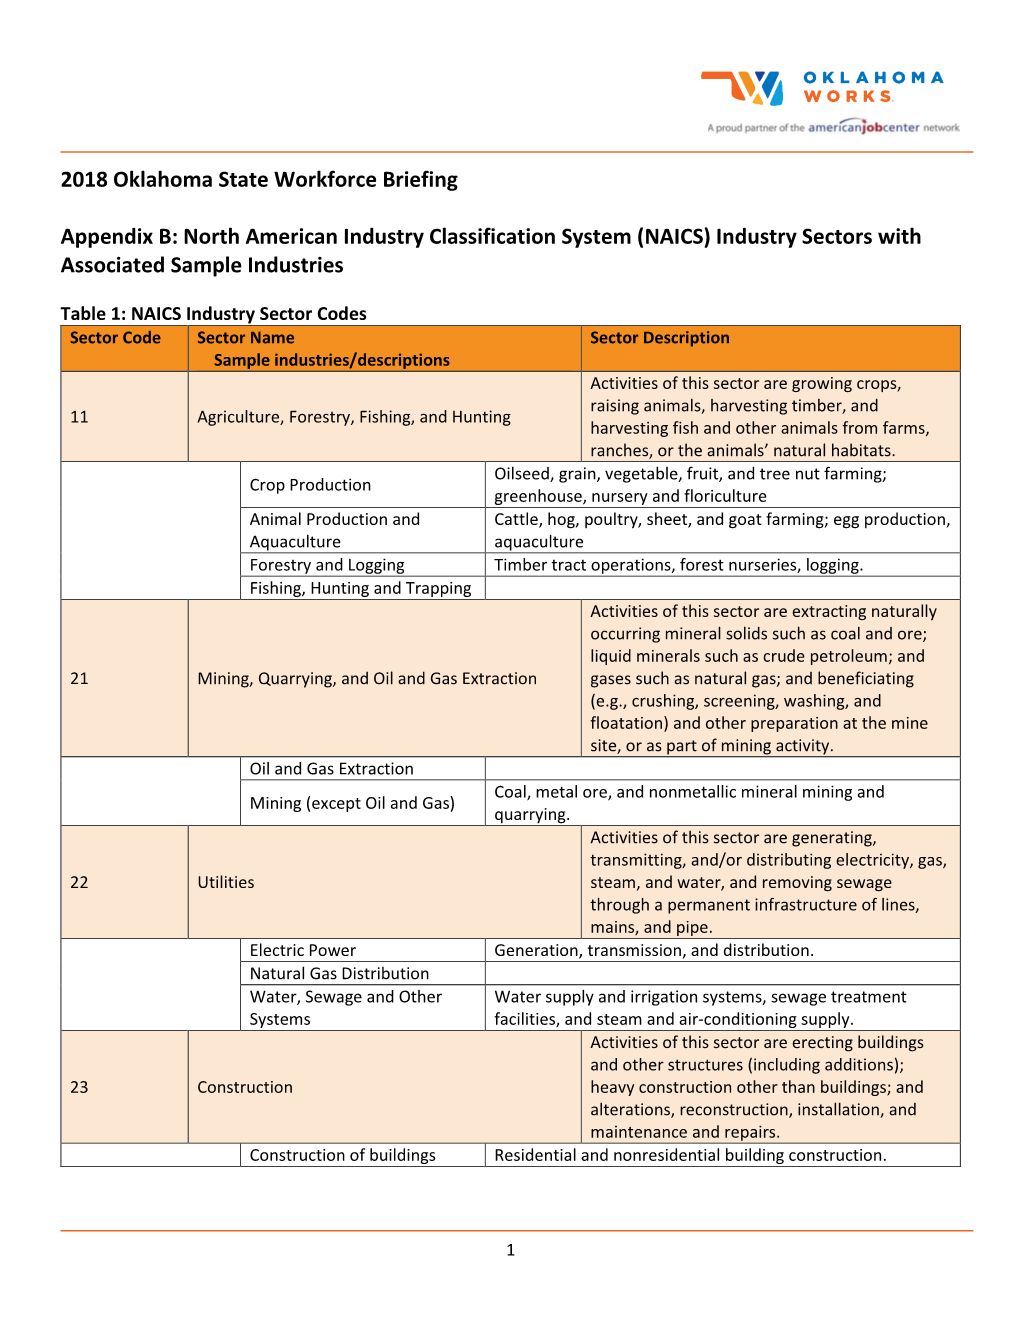 Table 1: NAICS Industry Sector Codes